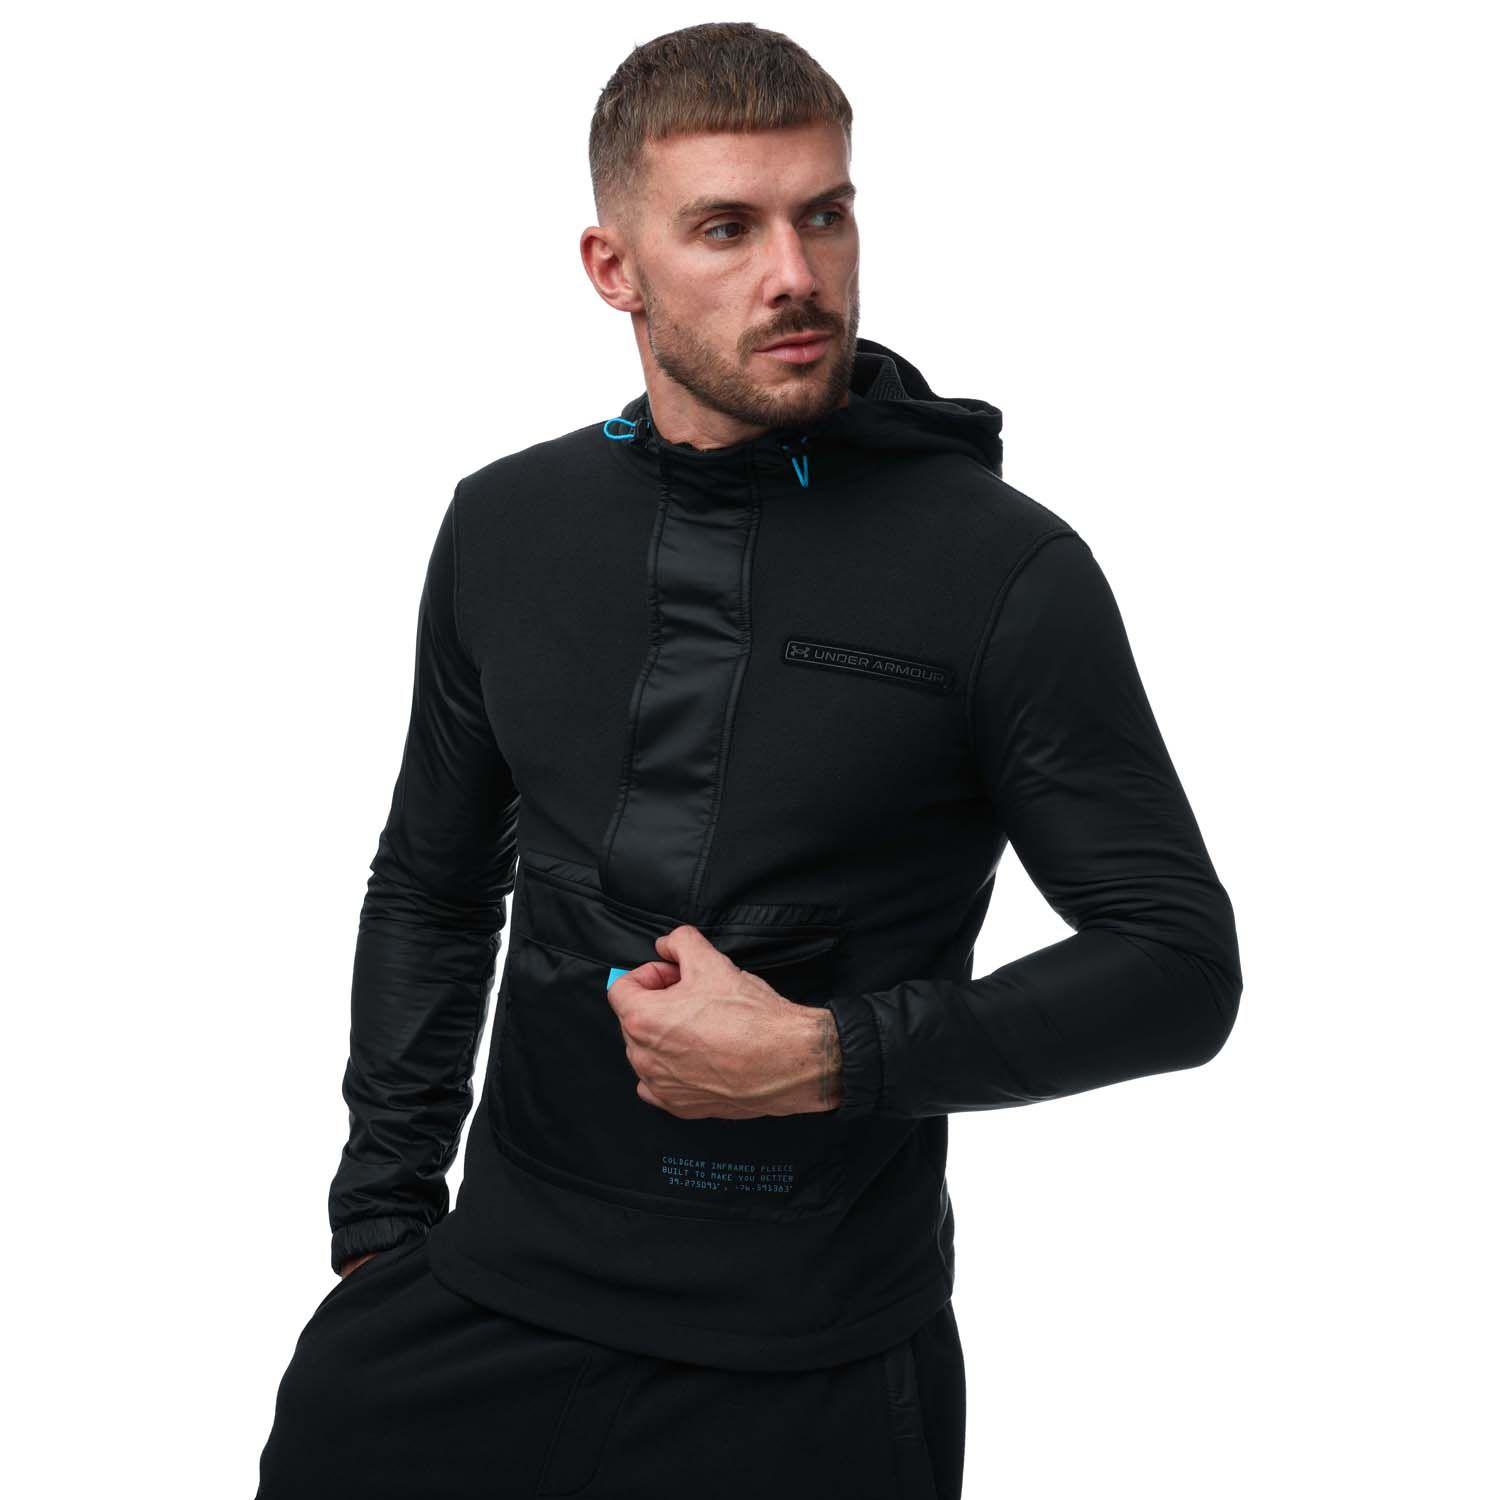 Under Armour Coldgear Infrared Utility Half Zip Jacket in Black for Men